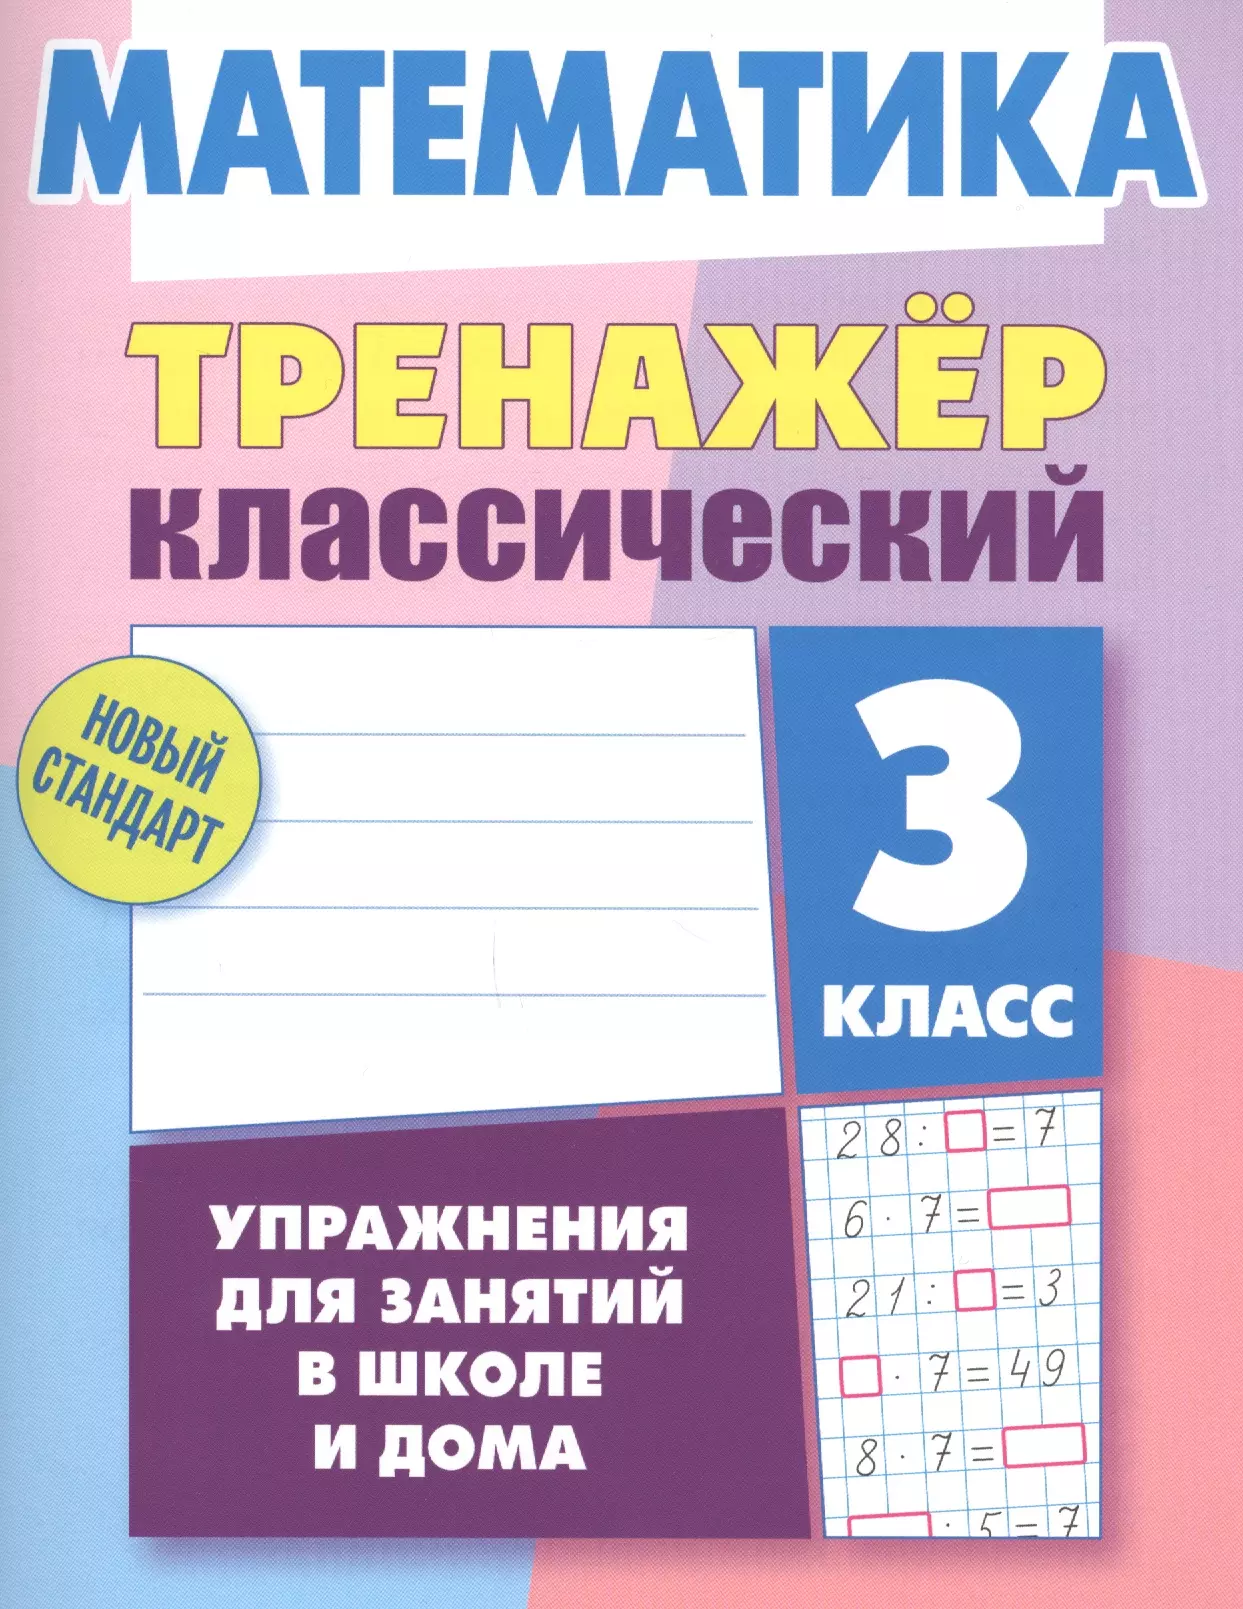 Ульянов Д. В. Математика. 3 класс